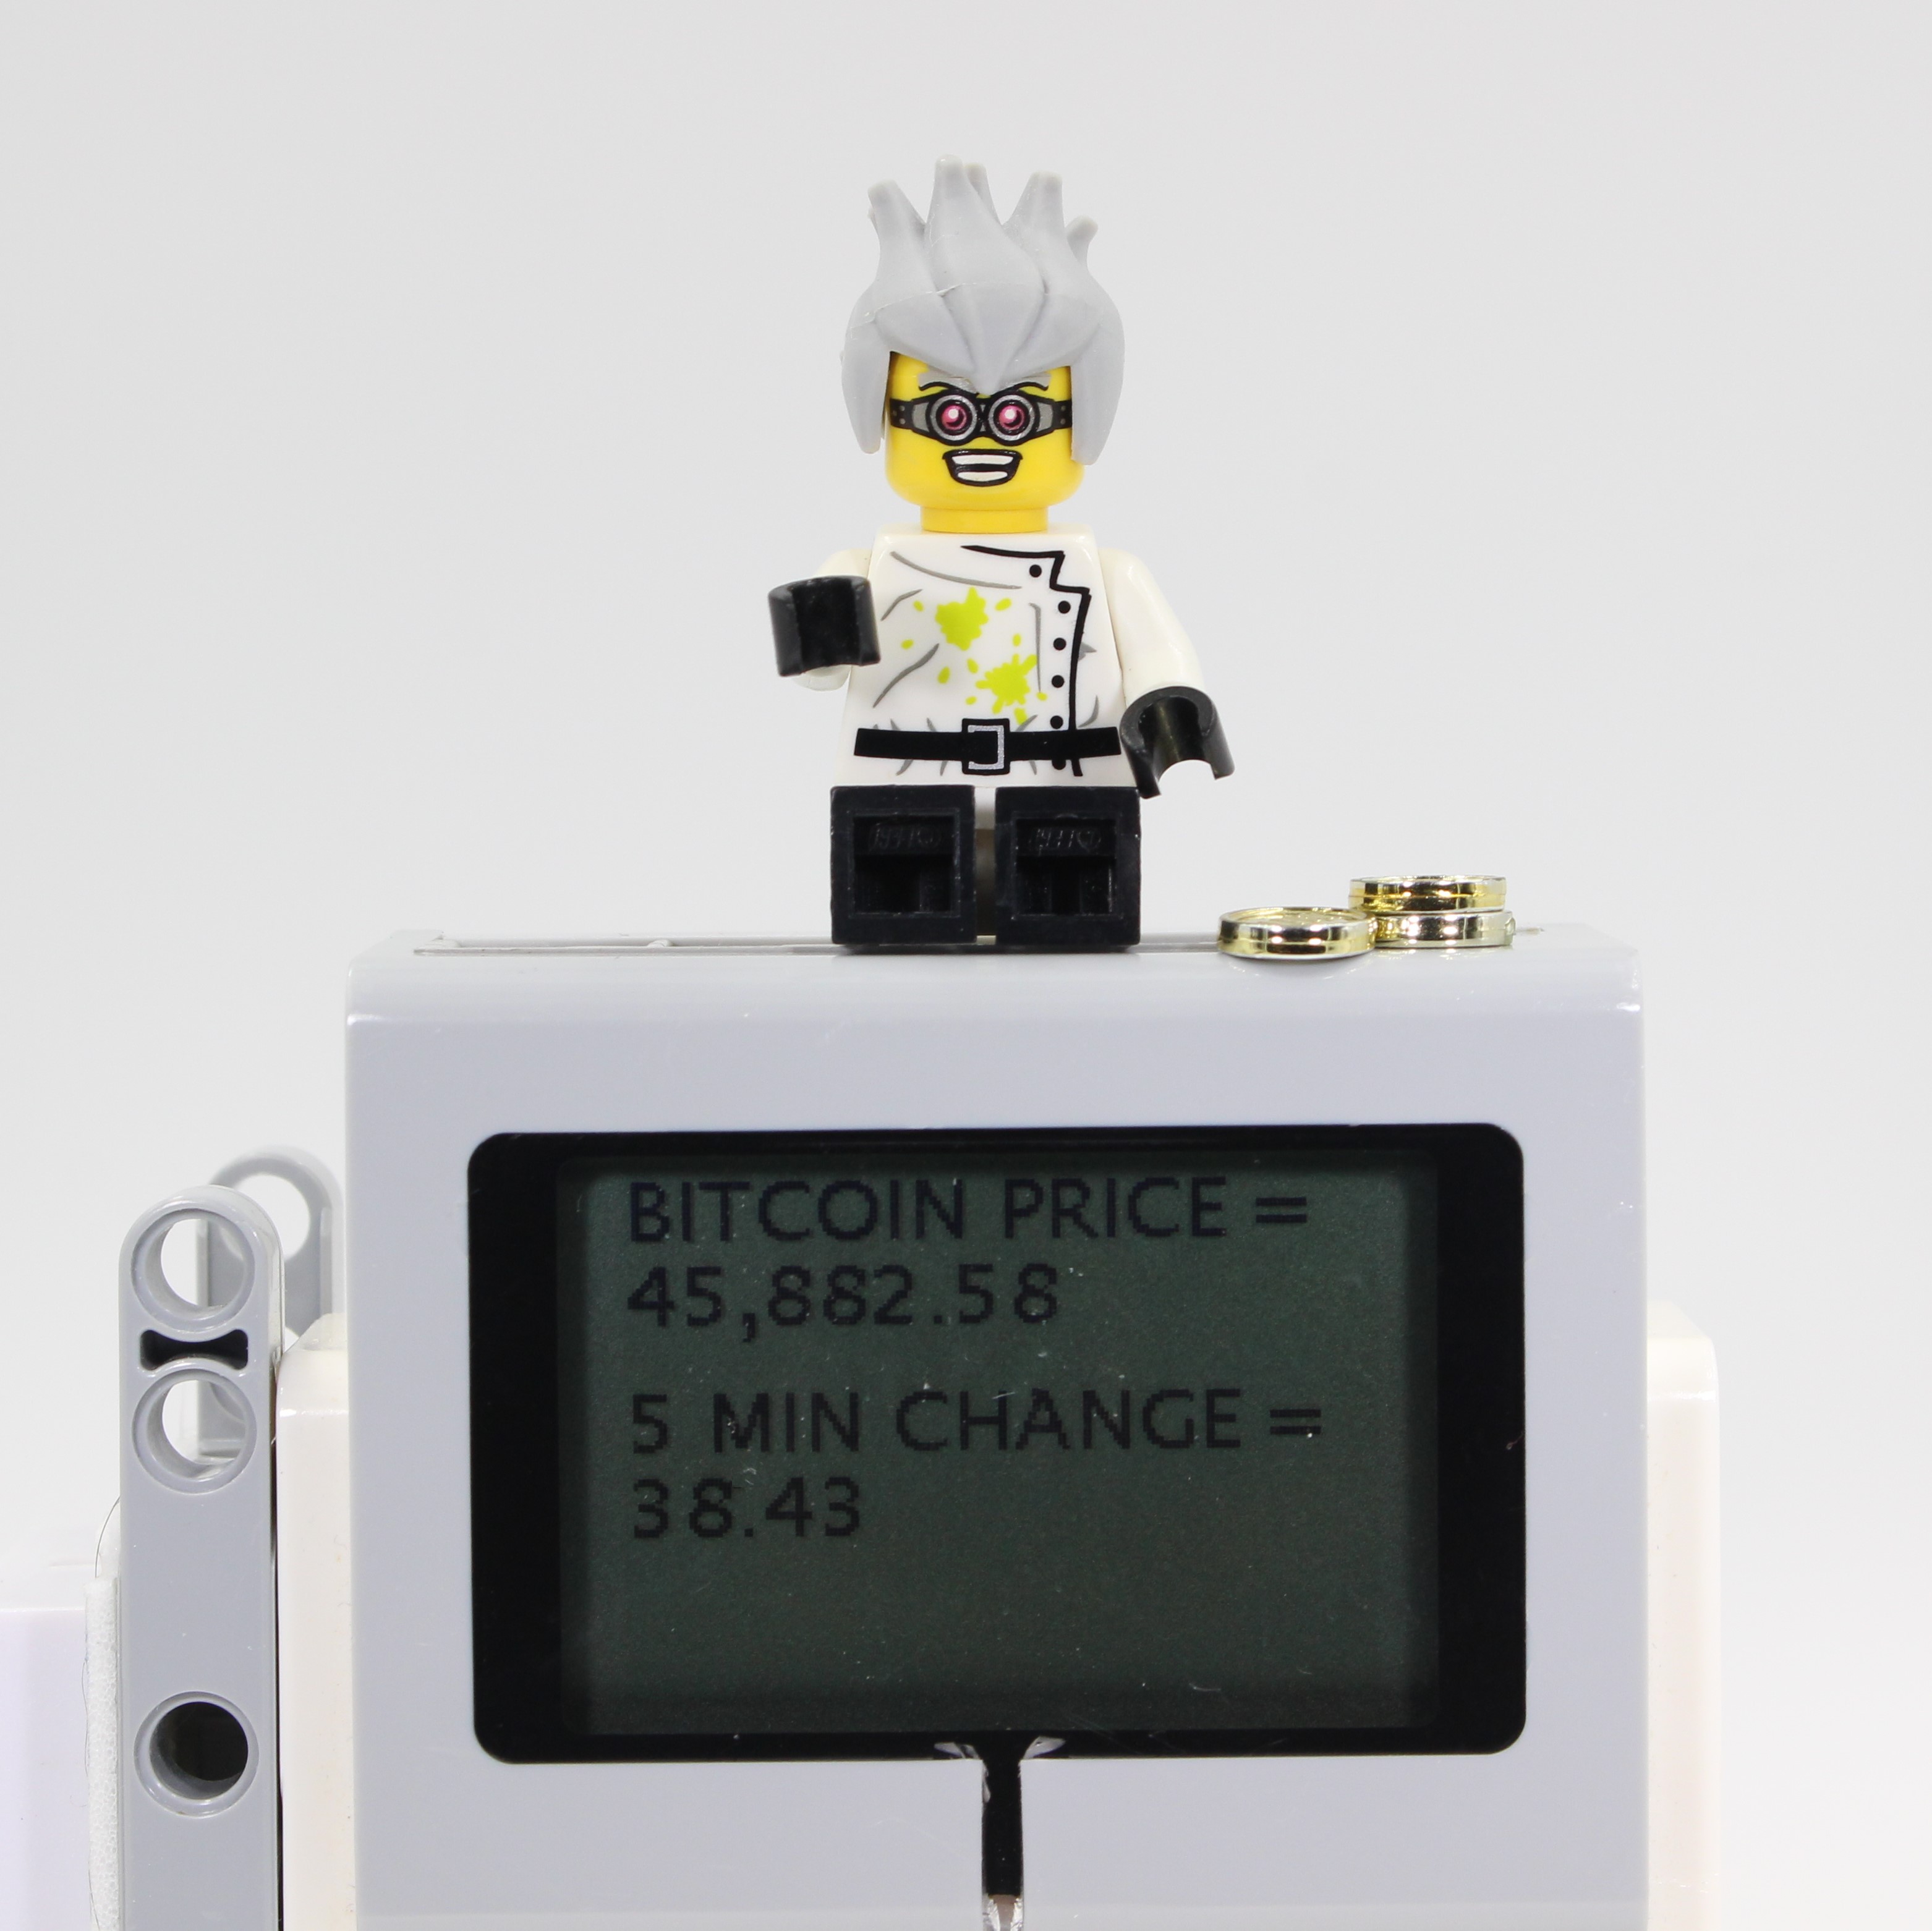 The LEGO bitcoin analyst